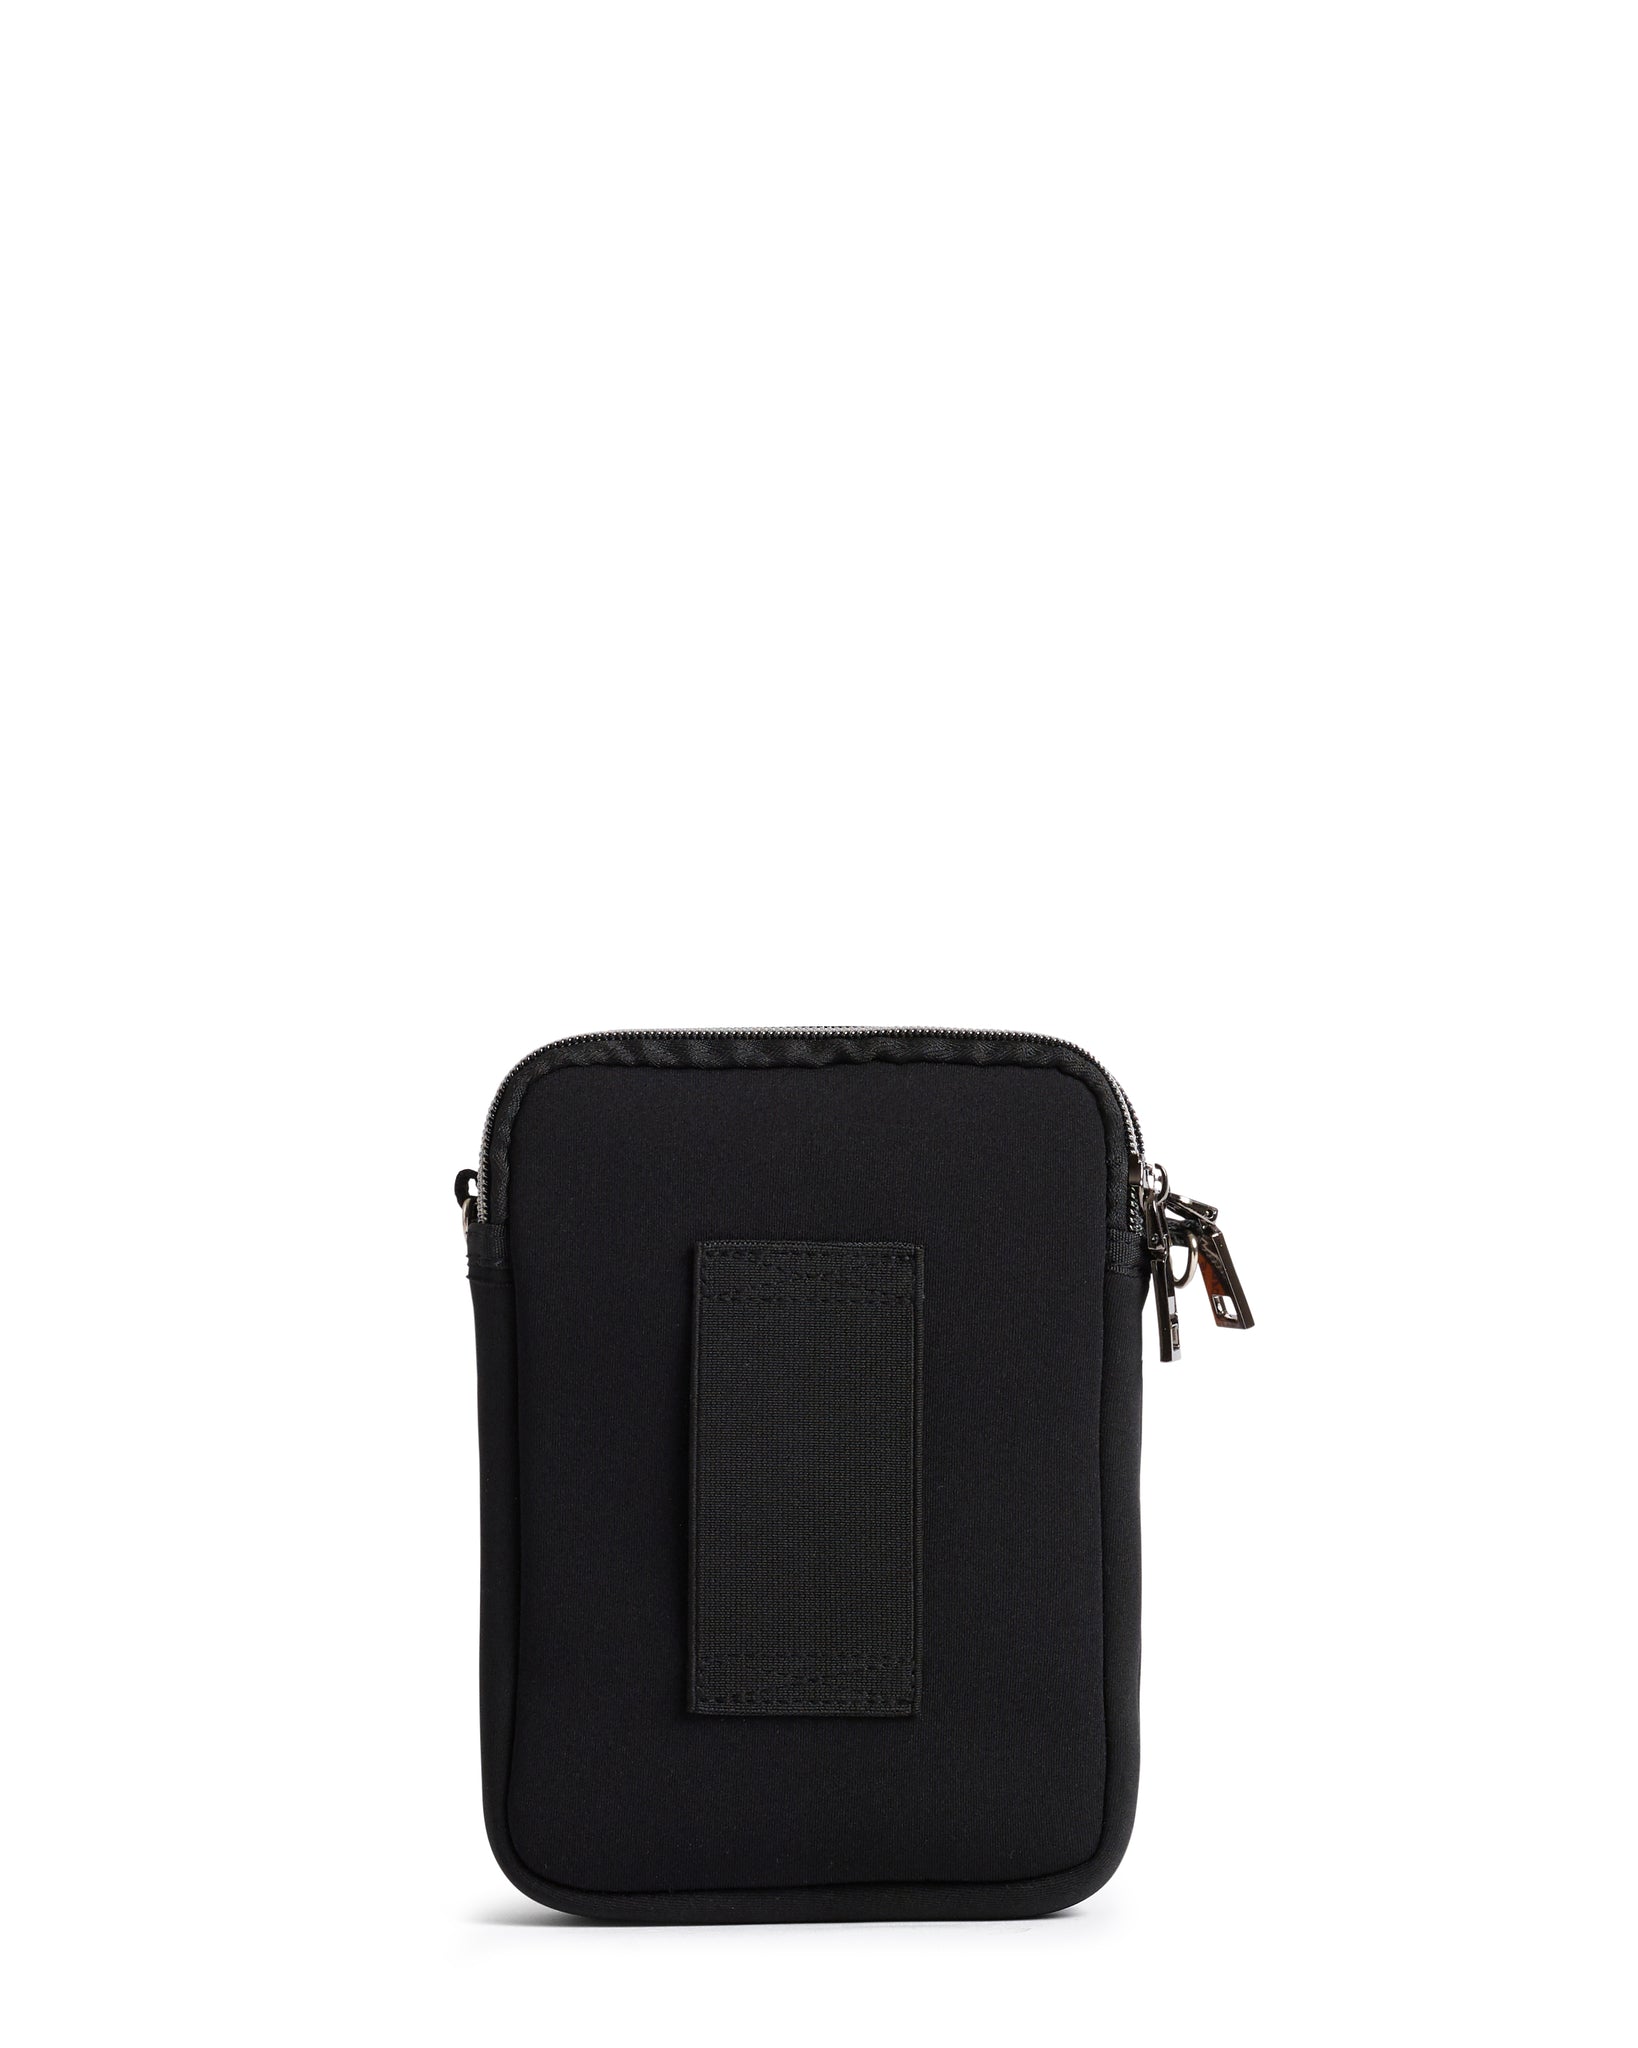 The Mimi Bag (BLACK) Neoprene Crossbody Bag